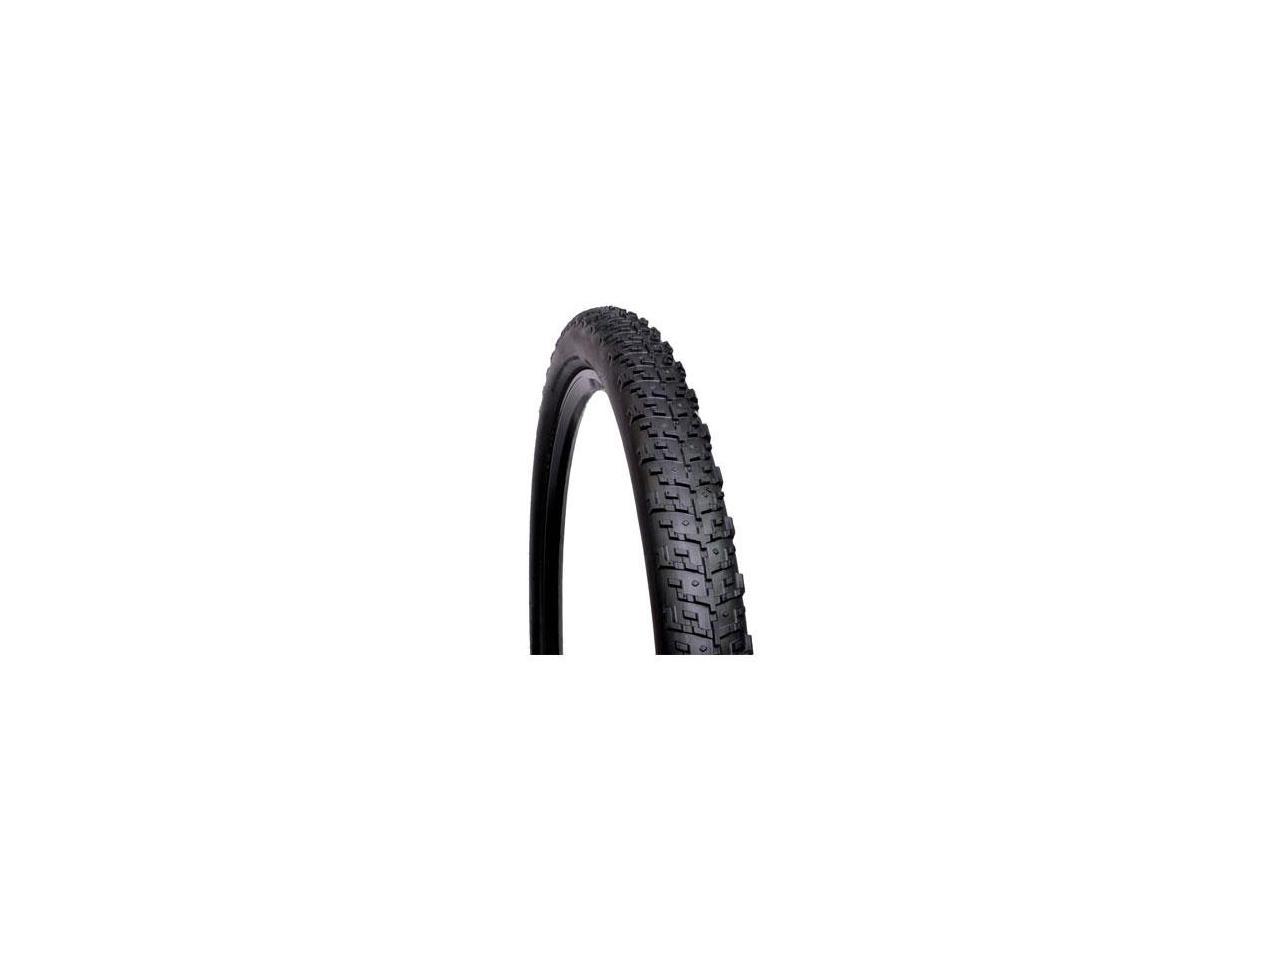 Folding Bead 29 x 2.1" Black WTB Nano TCS Light Fast Rolling Tire 